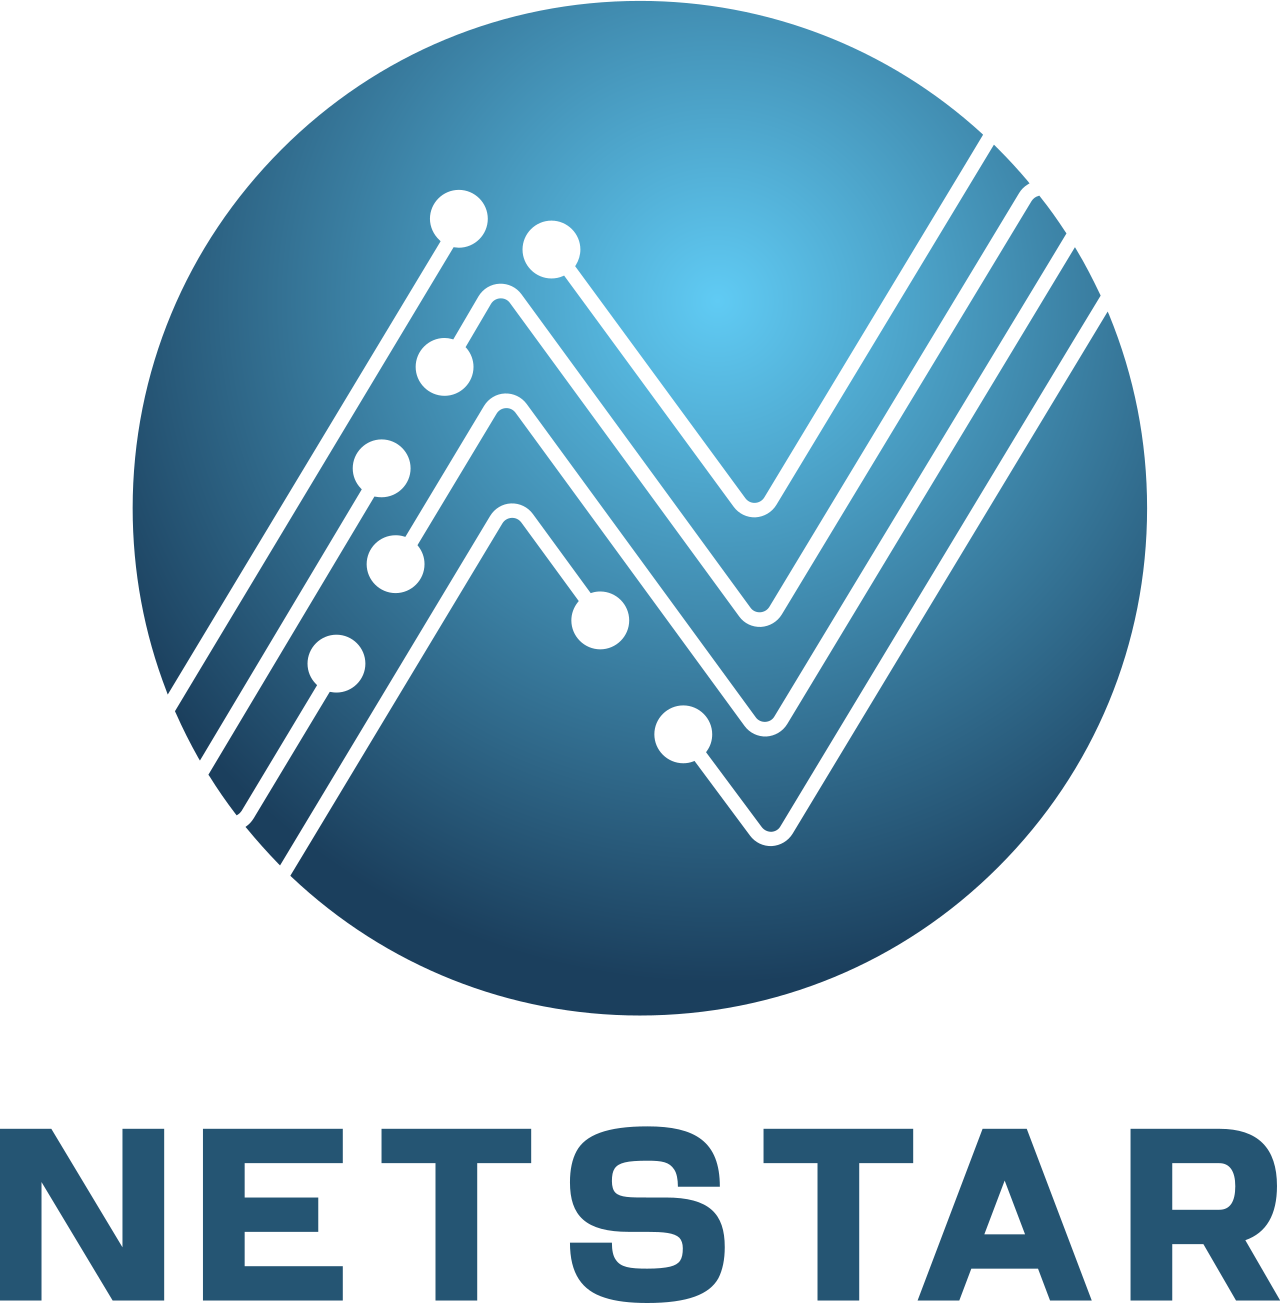 Netstar's logo